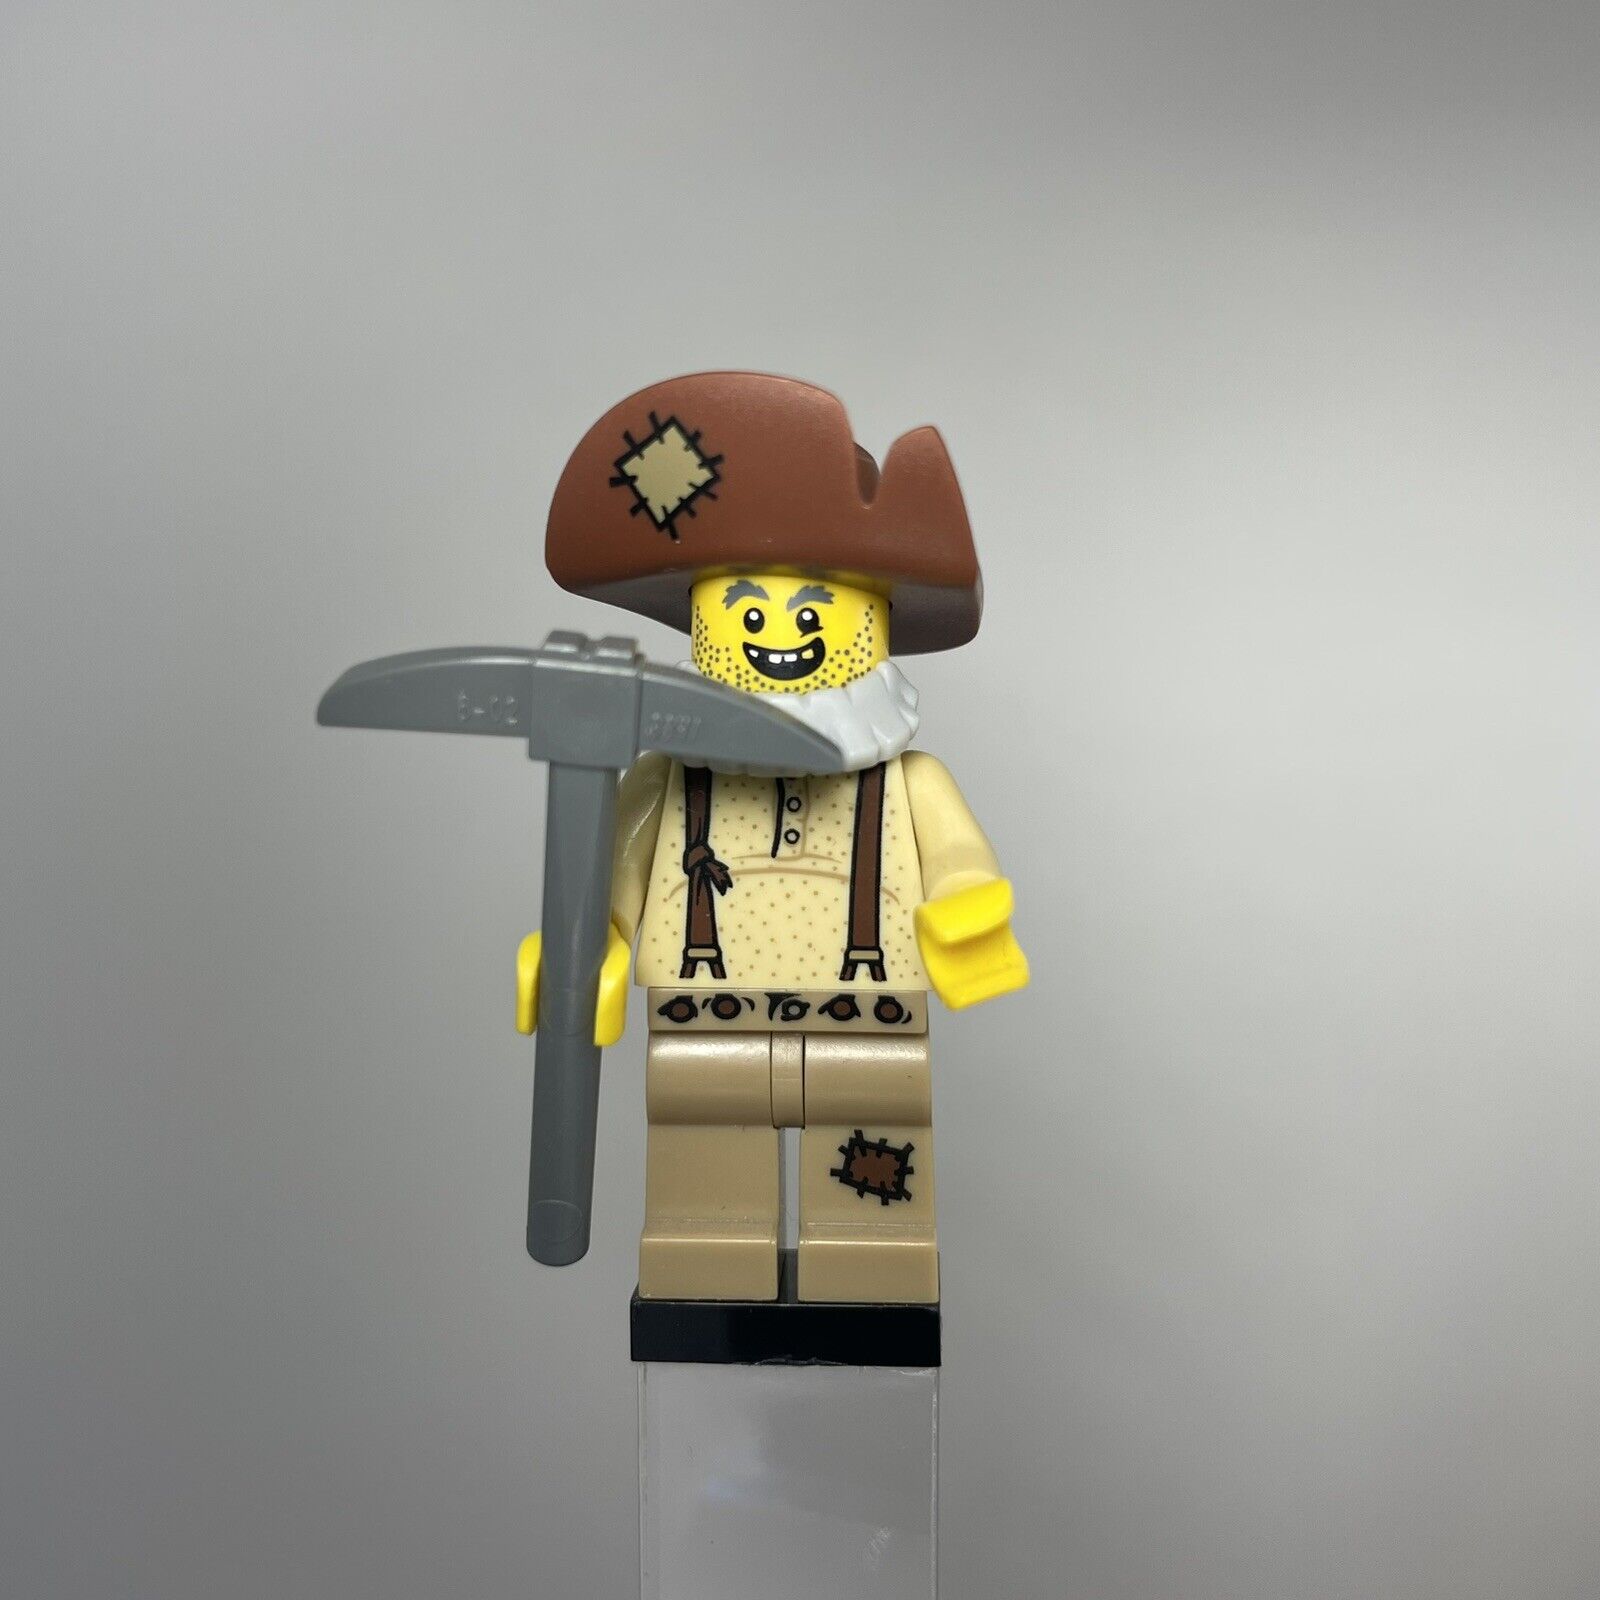 LEGO 71007 Minifigure Series 12 "Prospector" Gold Mine E